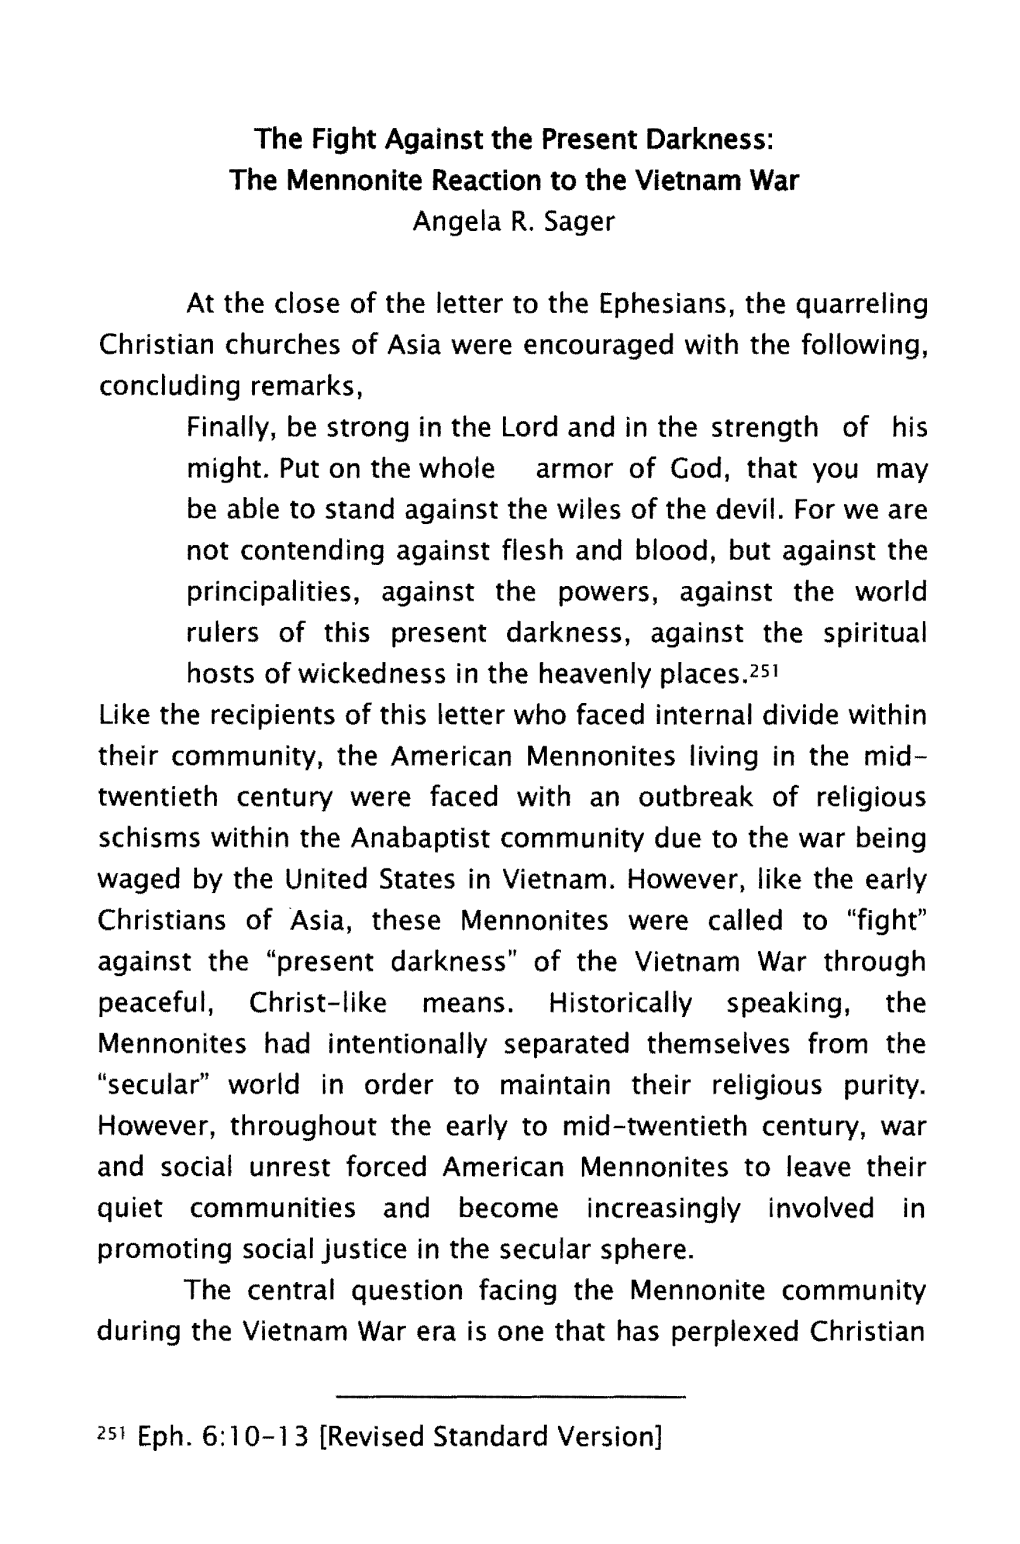 The Mennonite Reaction to the Vietnam War Angela R